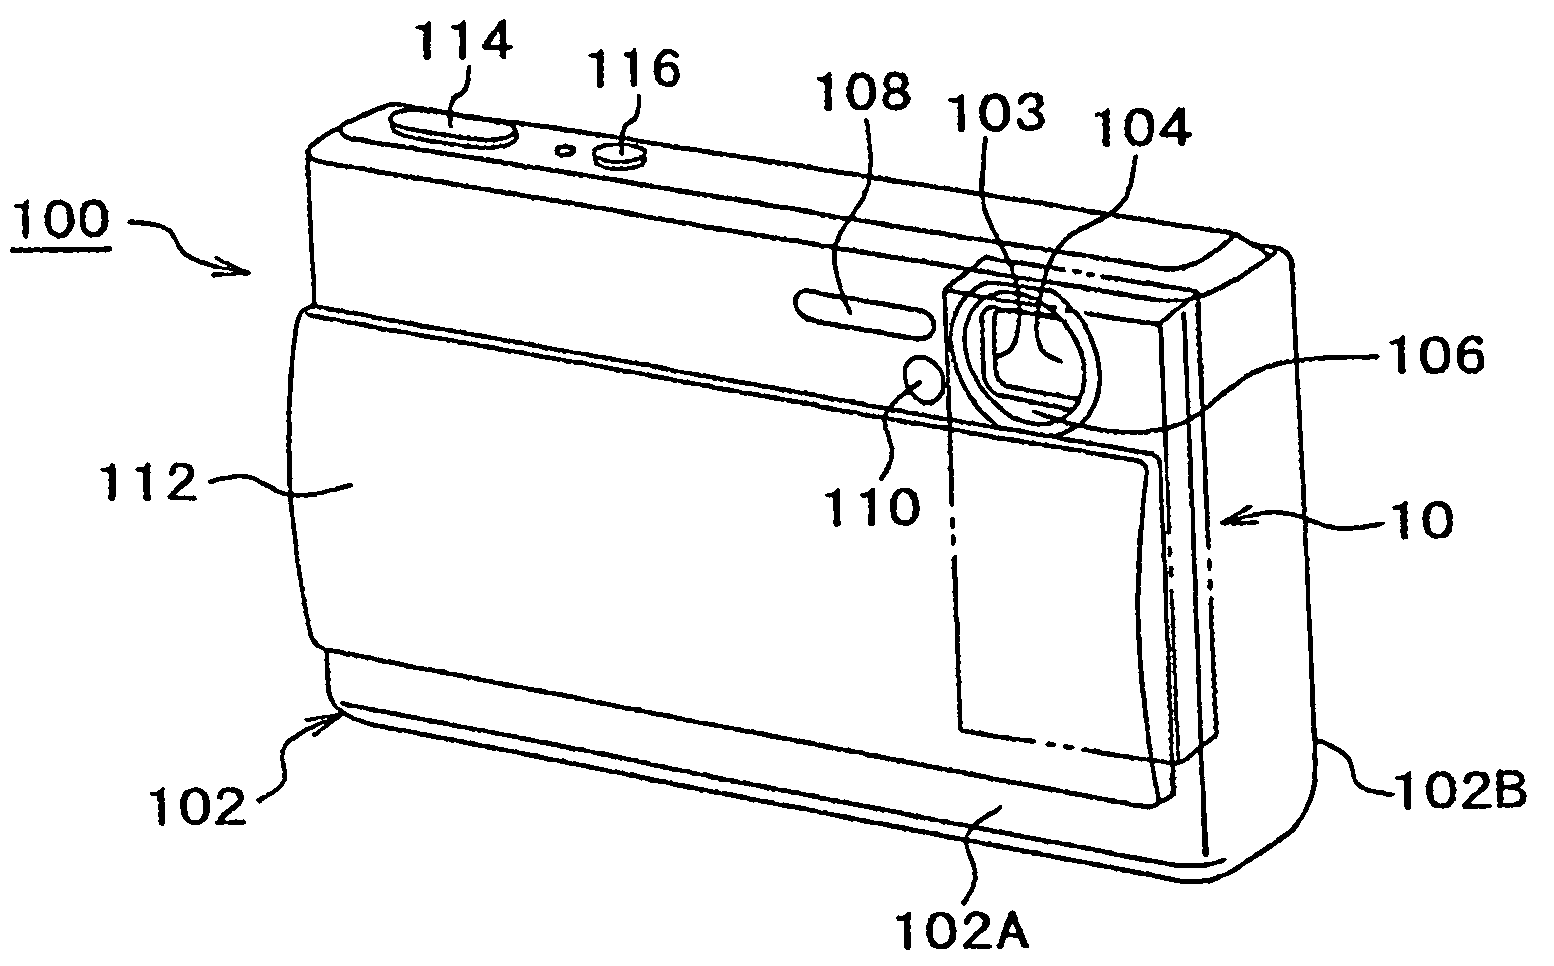 Lens barrel and imaging apparatus